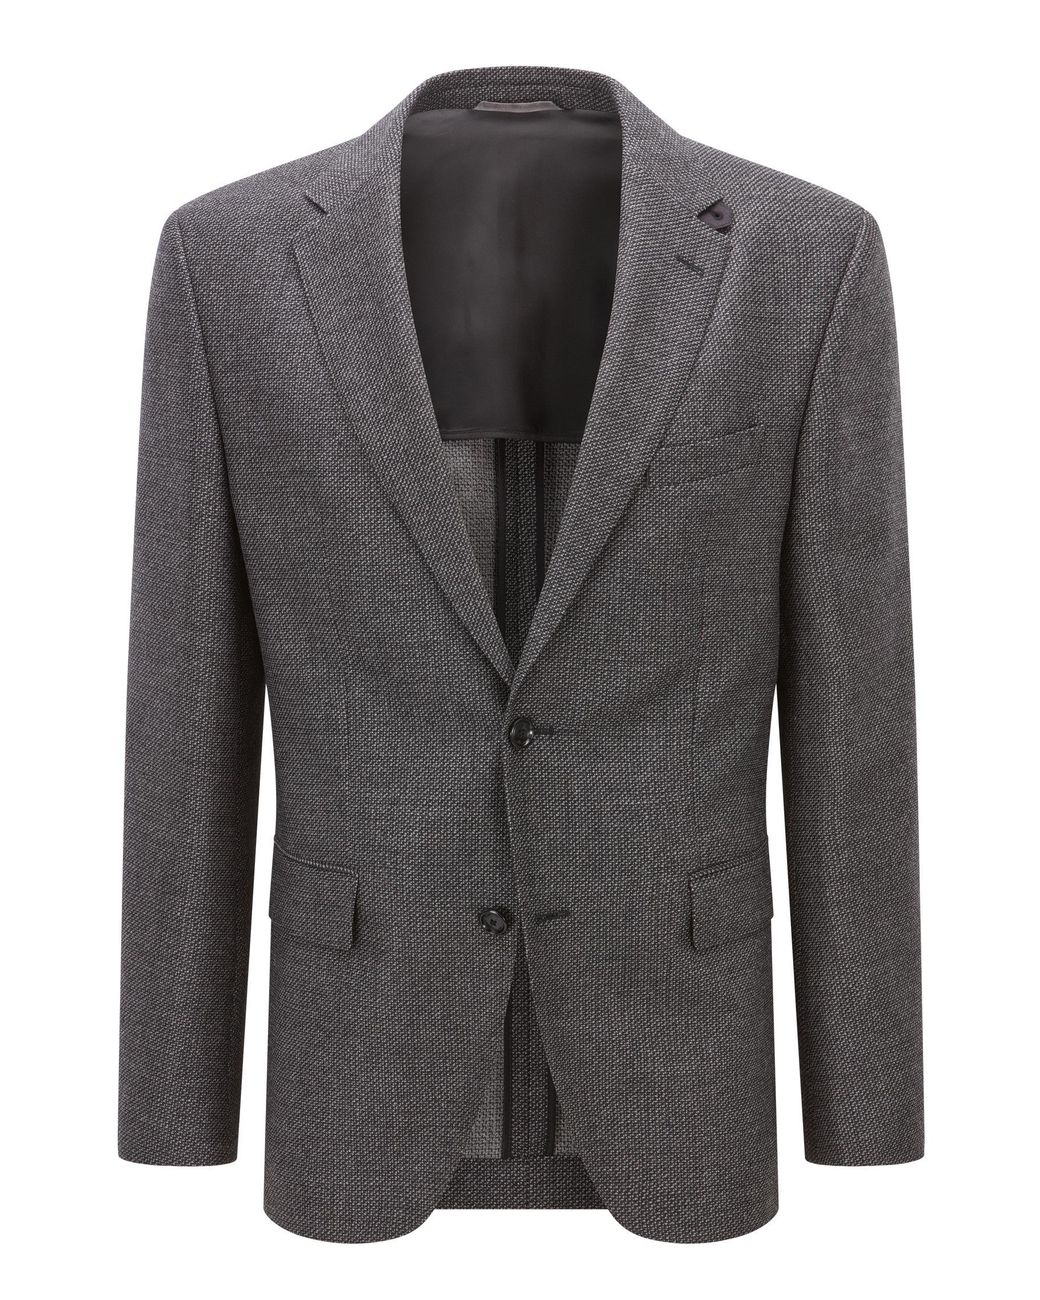 BOSS by HUGO BOSS Super 100 Virgin Wool Sport Coat, Regular Fit | Jestor in  Gray for Men | Lyst